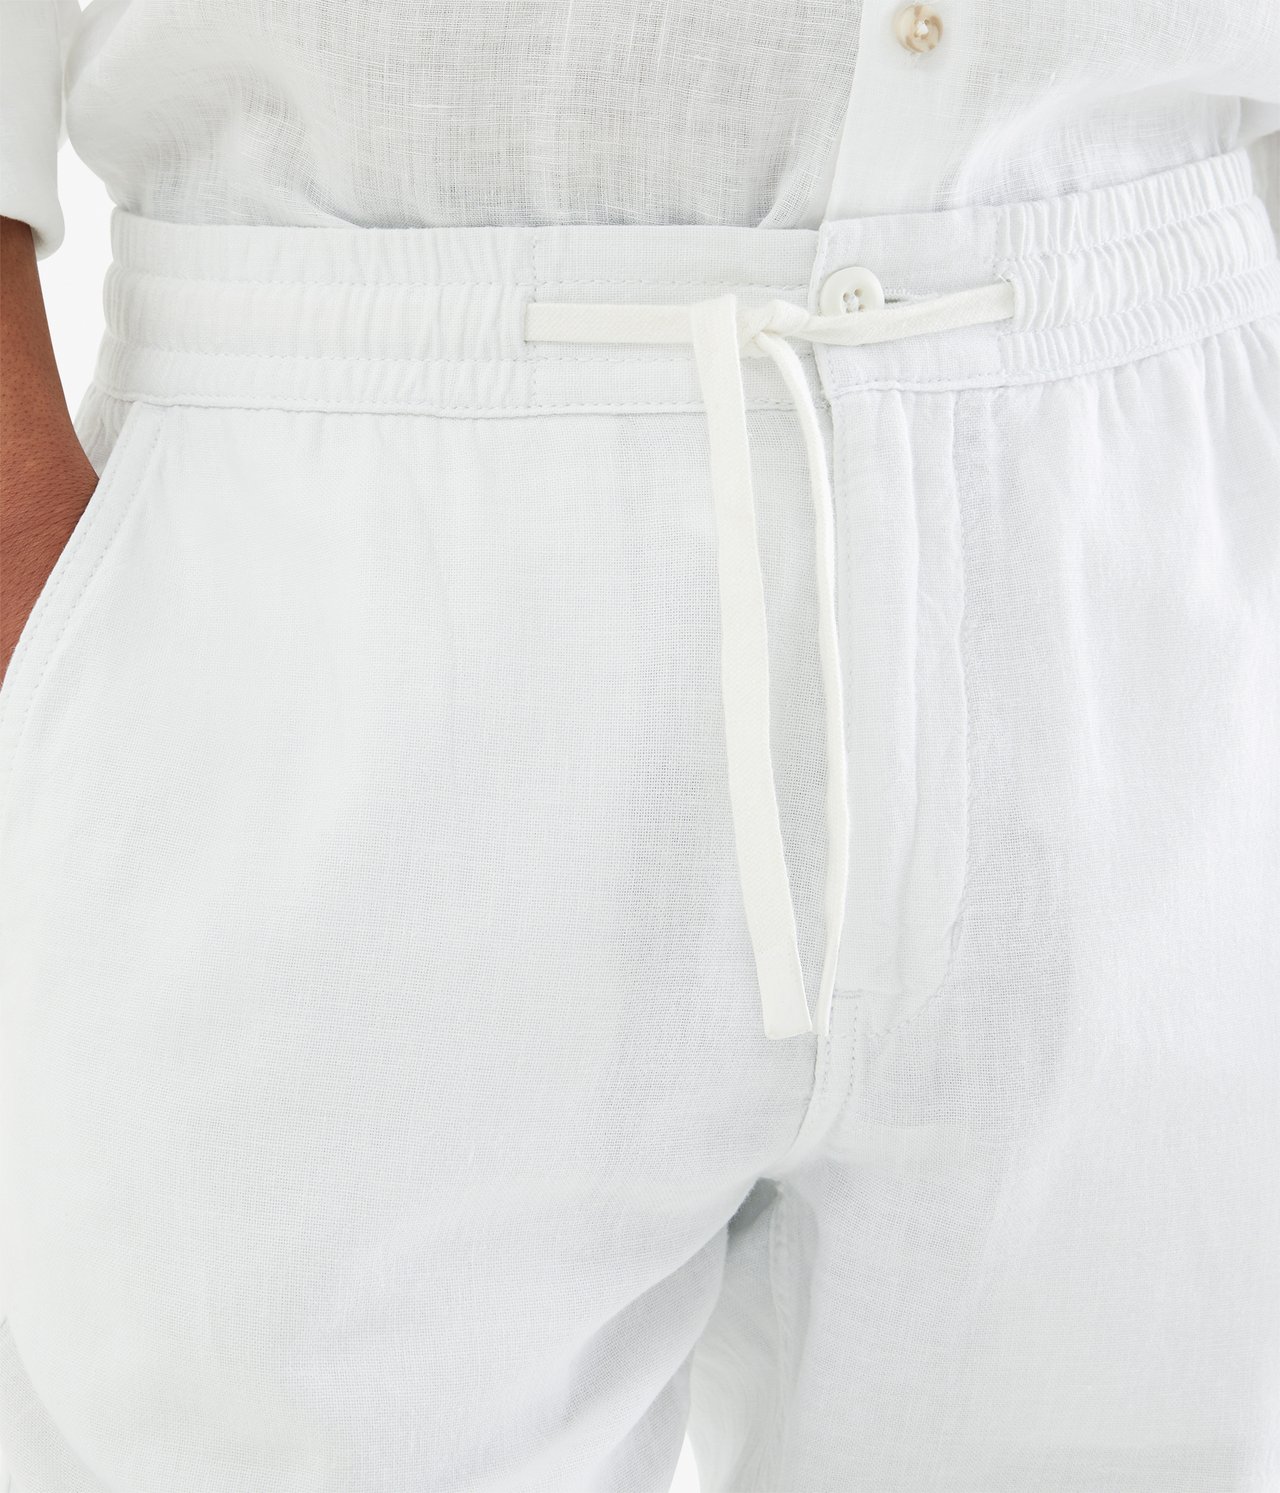 Bukse i linblanding - Hvit - 189cm / Storlek: M - 3